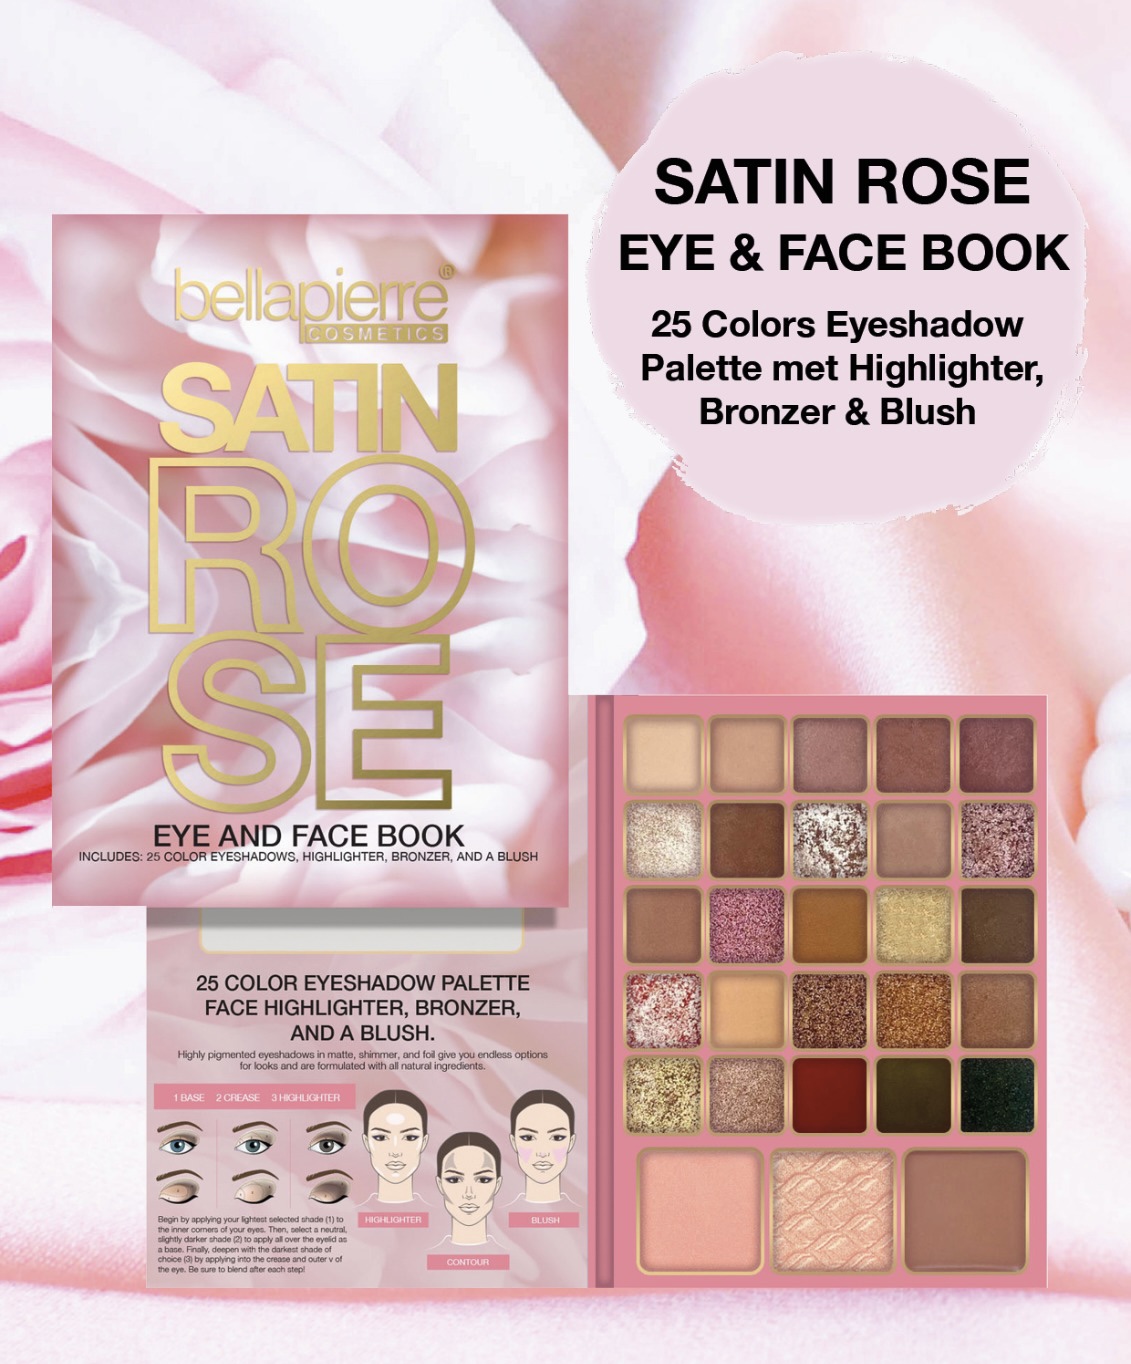 SATIN ROSE Eye & Face Book